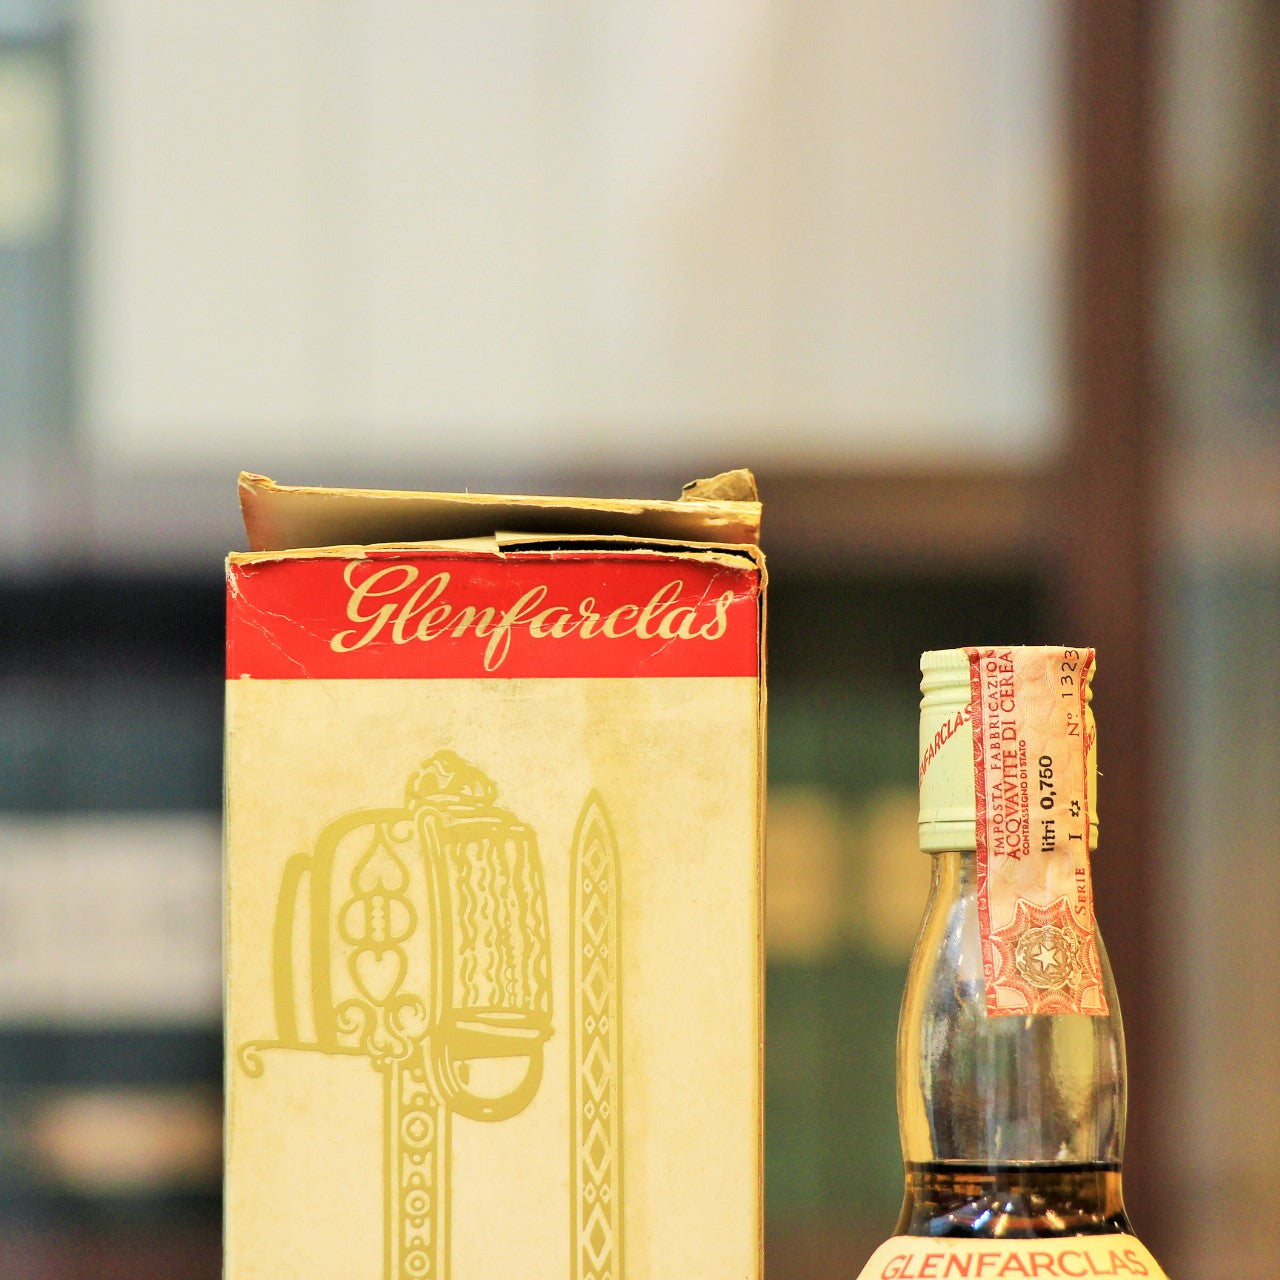 Glenfarclas - Glenlivet 8 Years Old All Malt Unblended Scotch Single Malt Whisky (1970s Bottling)